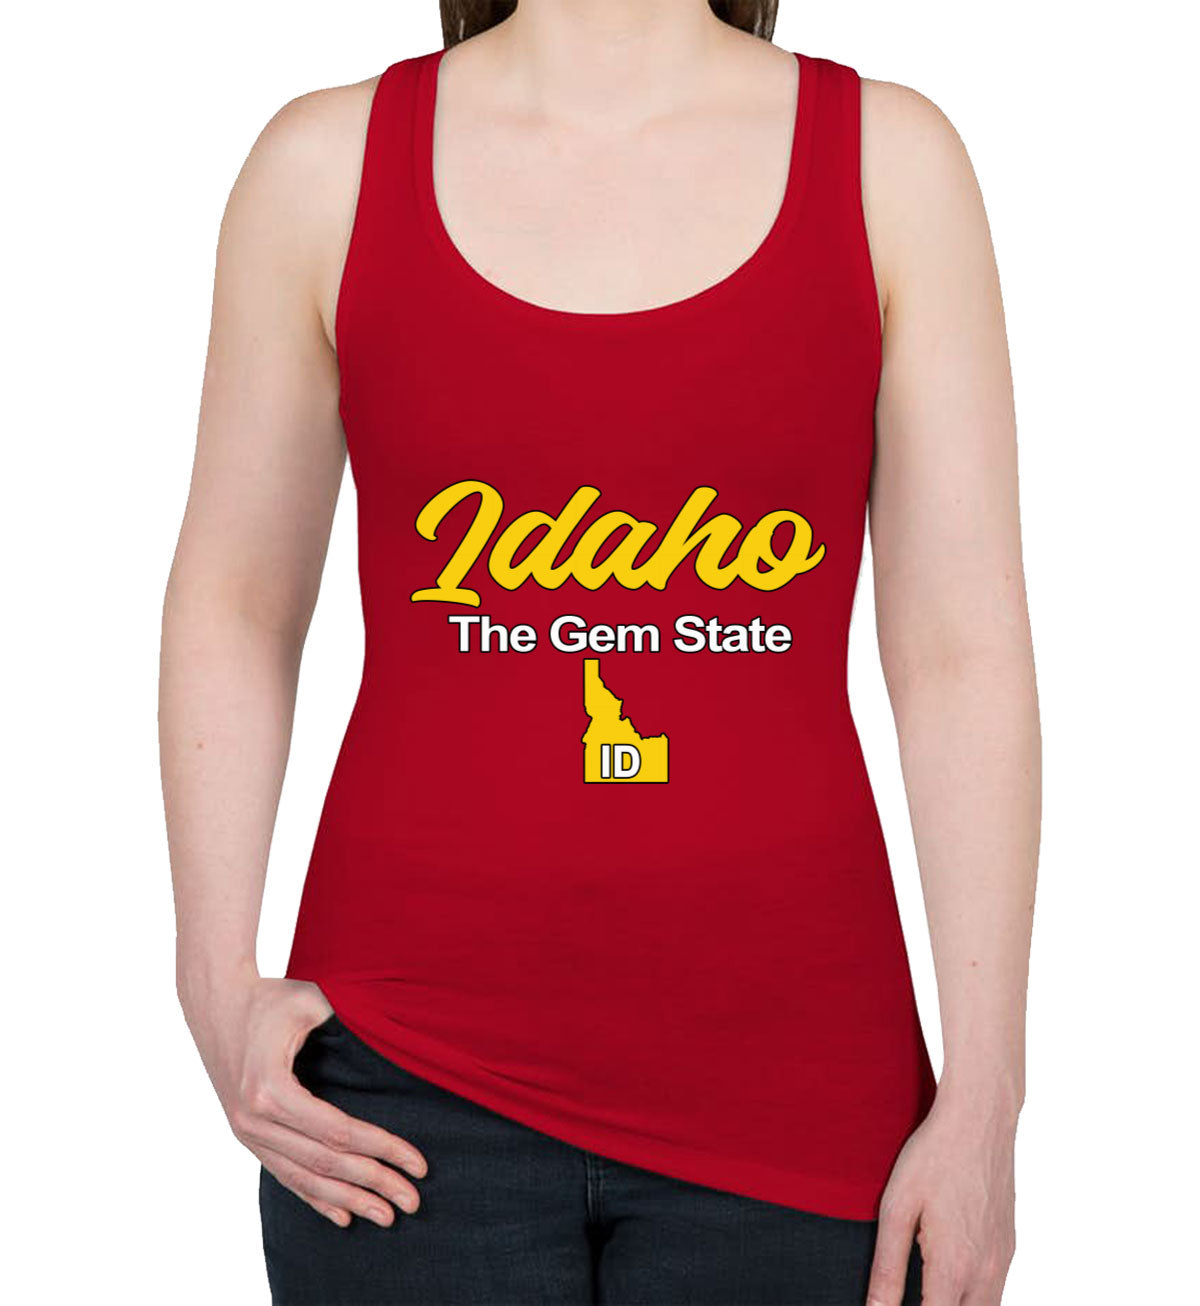 Idaho The Gem State Women's Racerback Tank Top